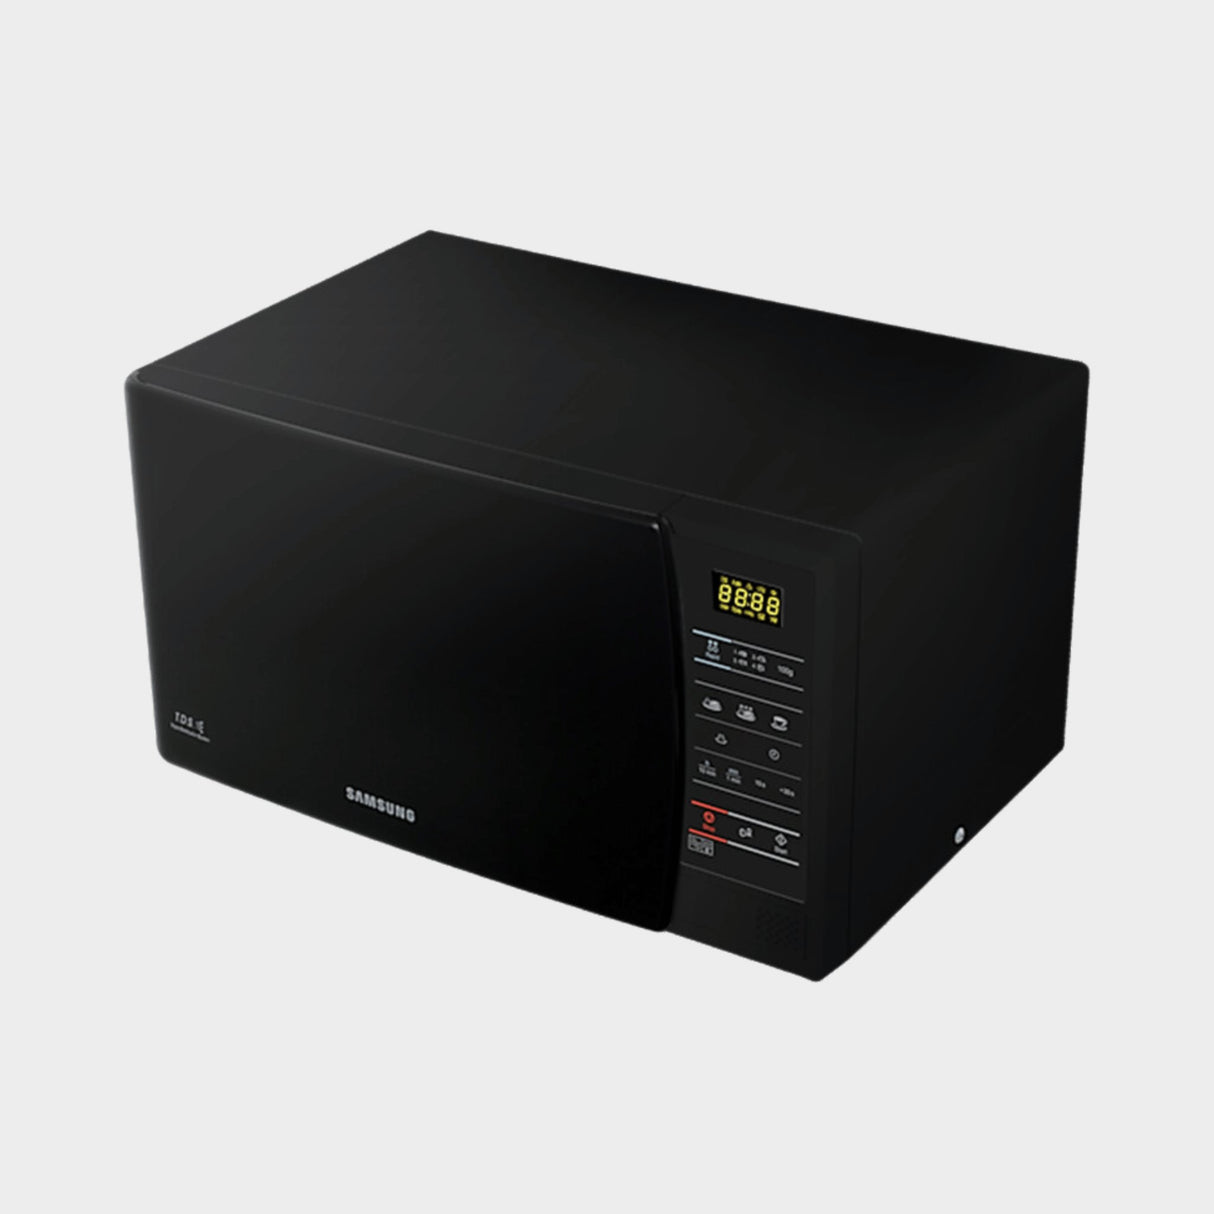 Samsung 20L 800W SOLO Microwave Oven ME731KB - Black - KWT Tech Mart